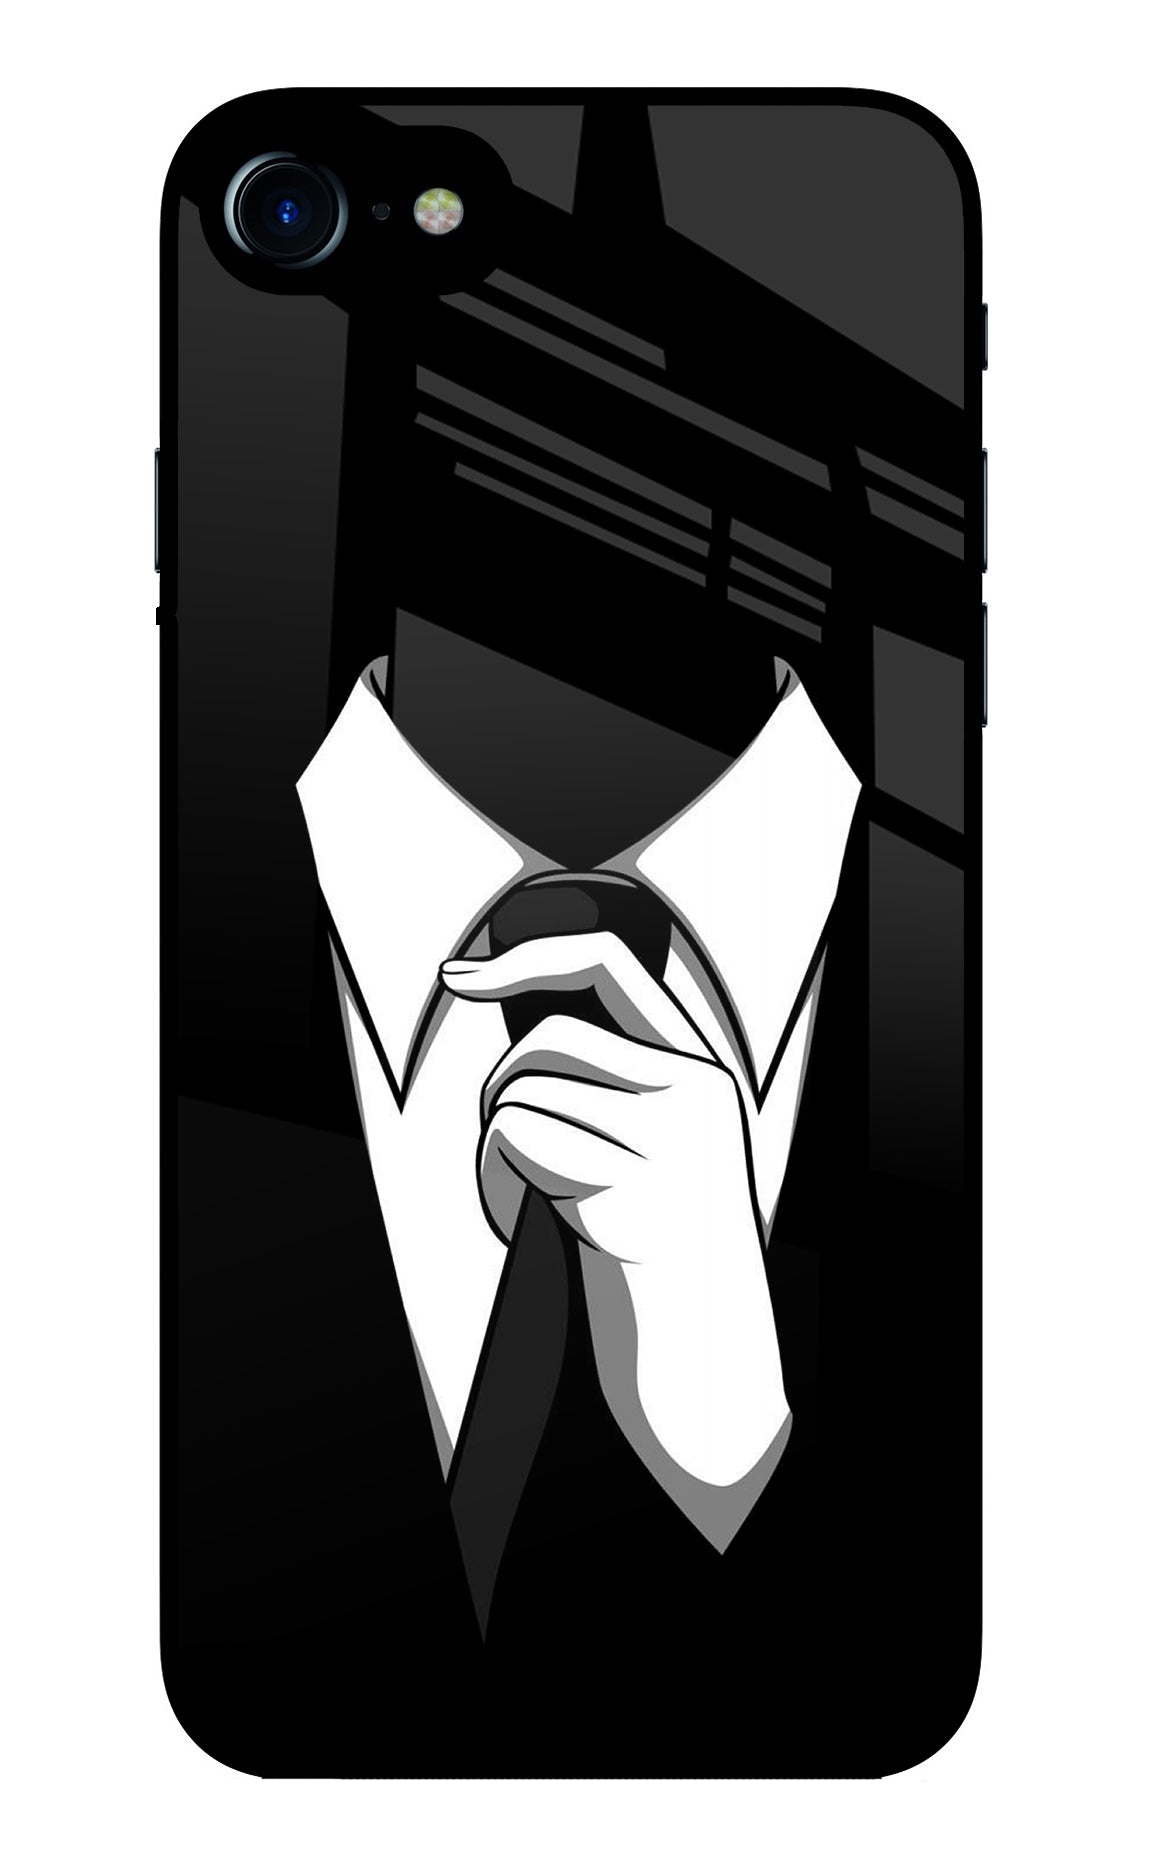 Black Tie iPhone 8/SE 2020 Glass Case